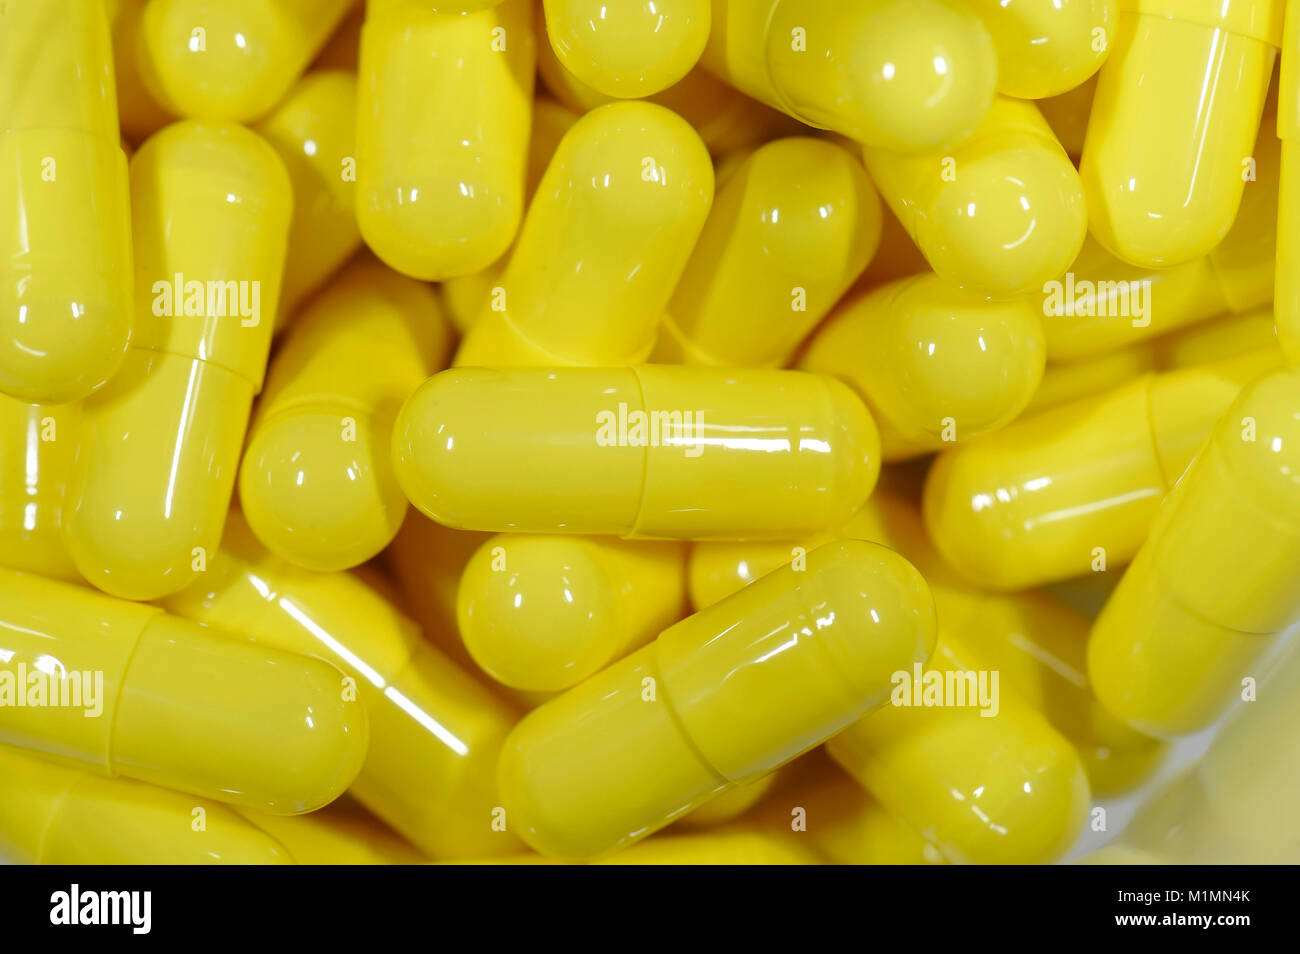 Pills, tablets, capsules, Pillen, Tabletten, Kapseln Stock Photo